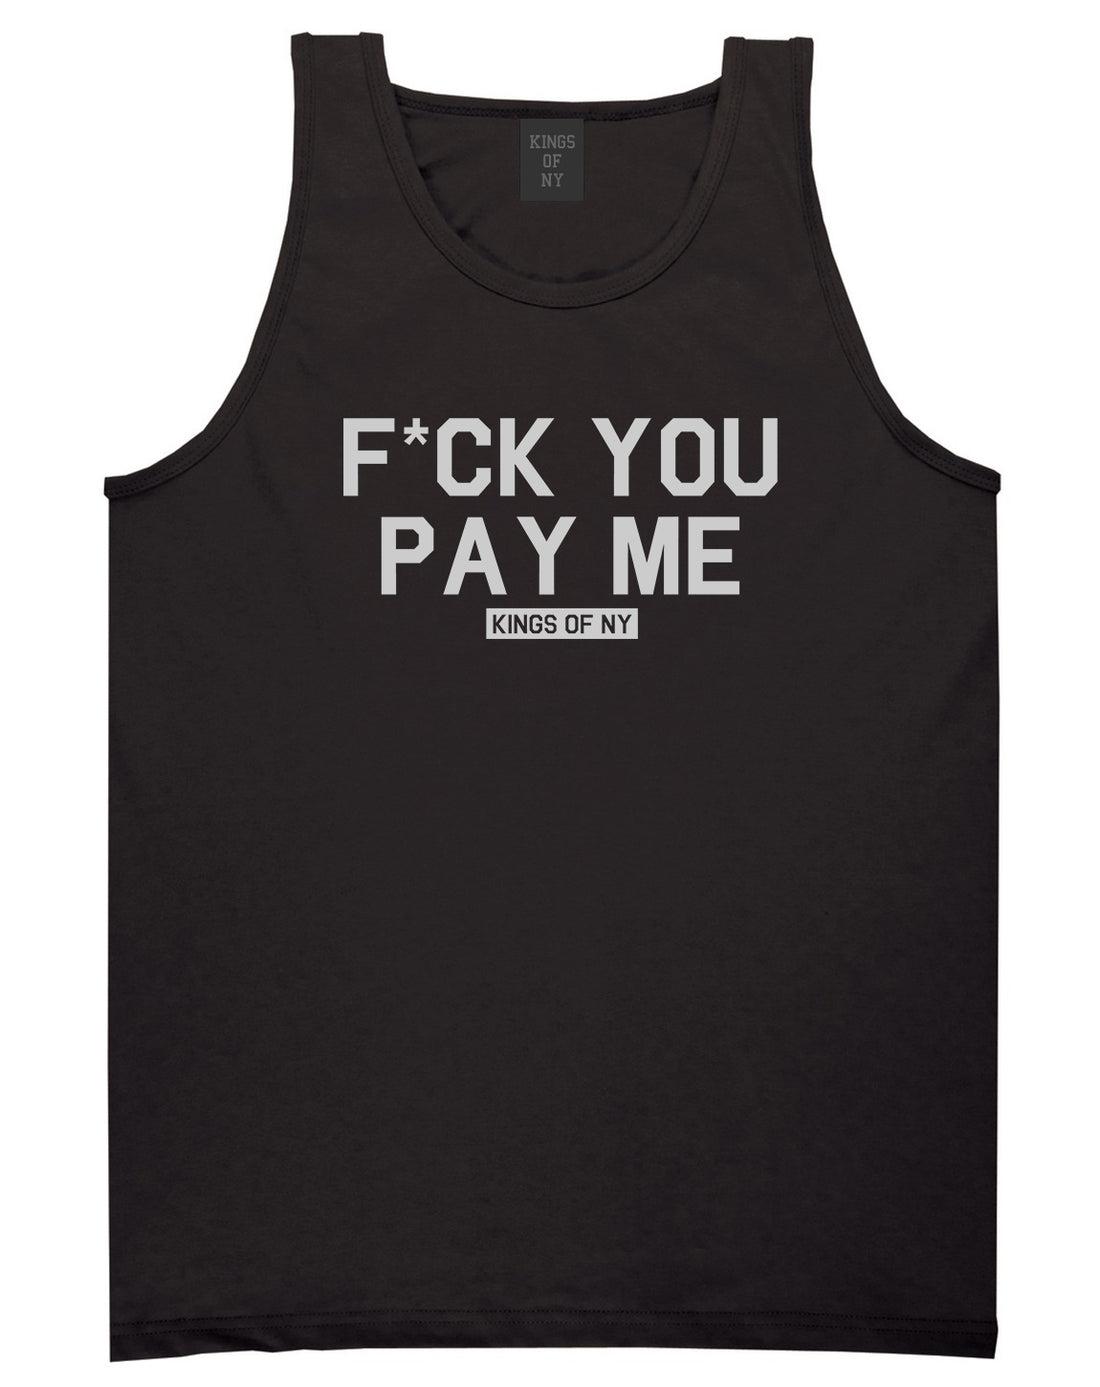 Fck You Pay Me Mens Tank Top Shirt Black